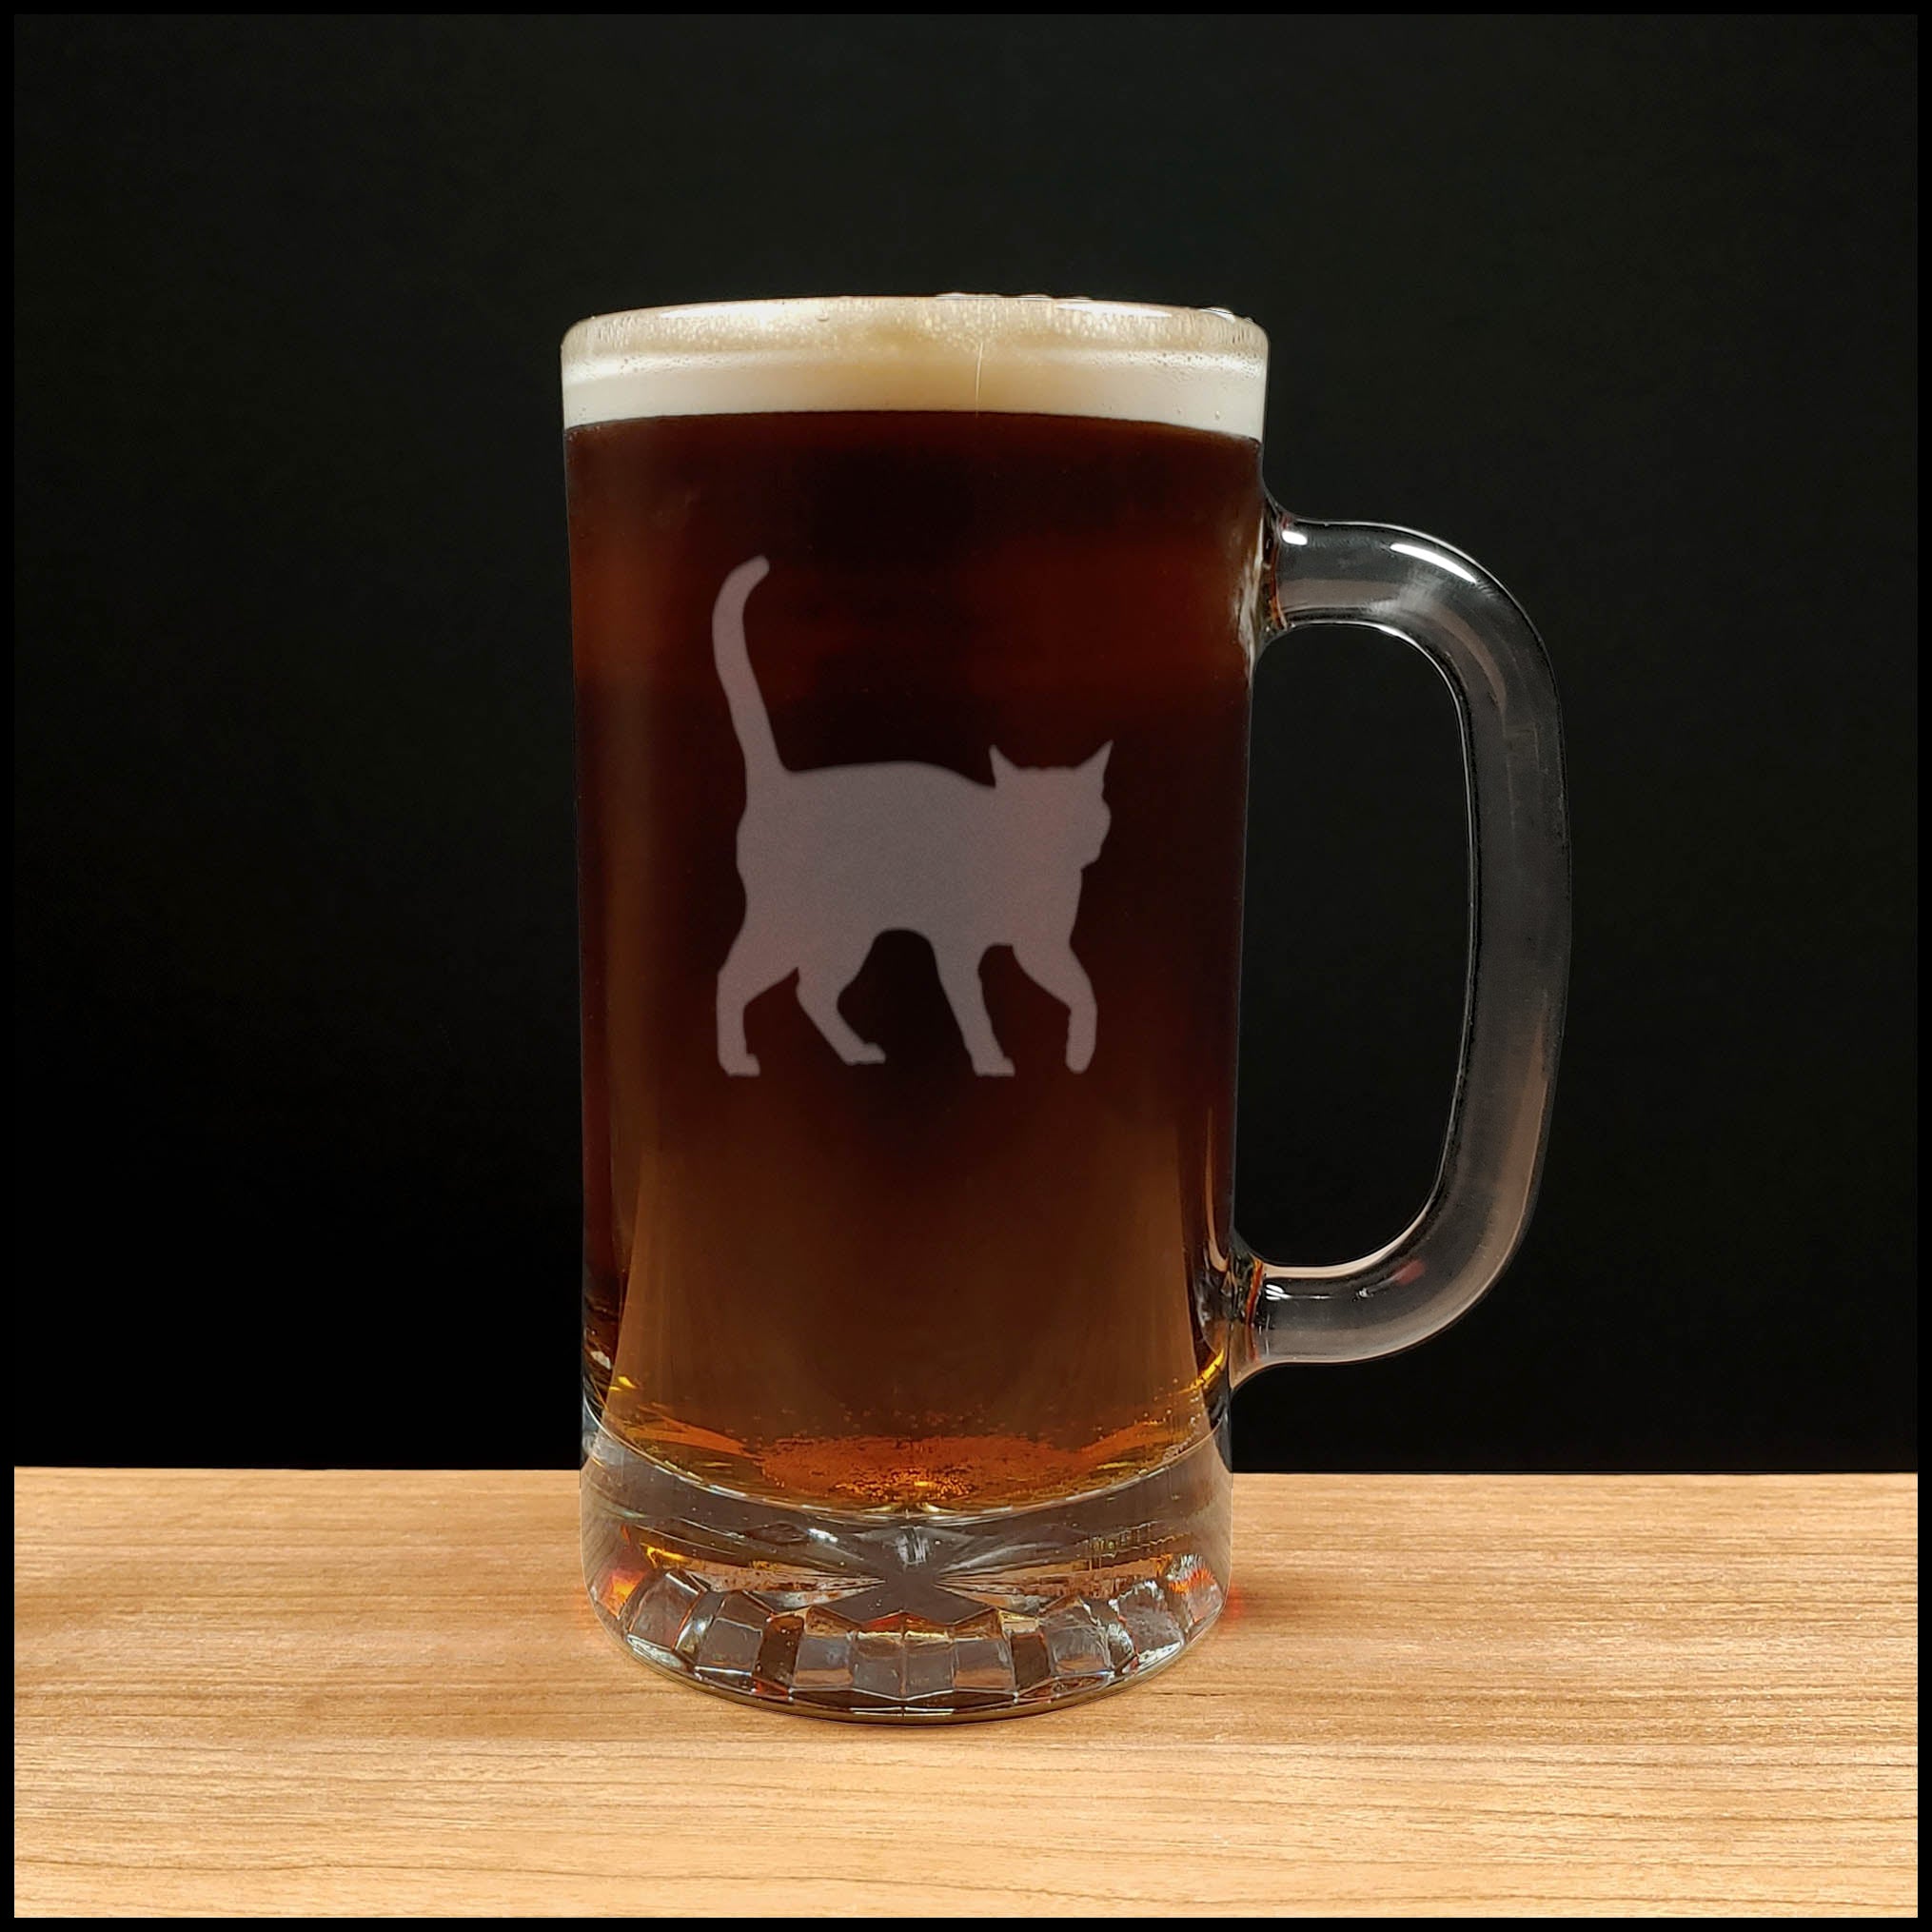 Cat Beer Mug with Dark Beer - Design 2 - Copyright Hues in Glass